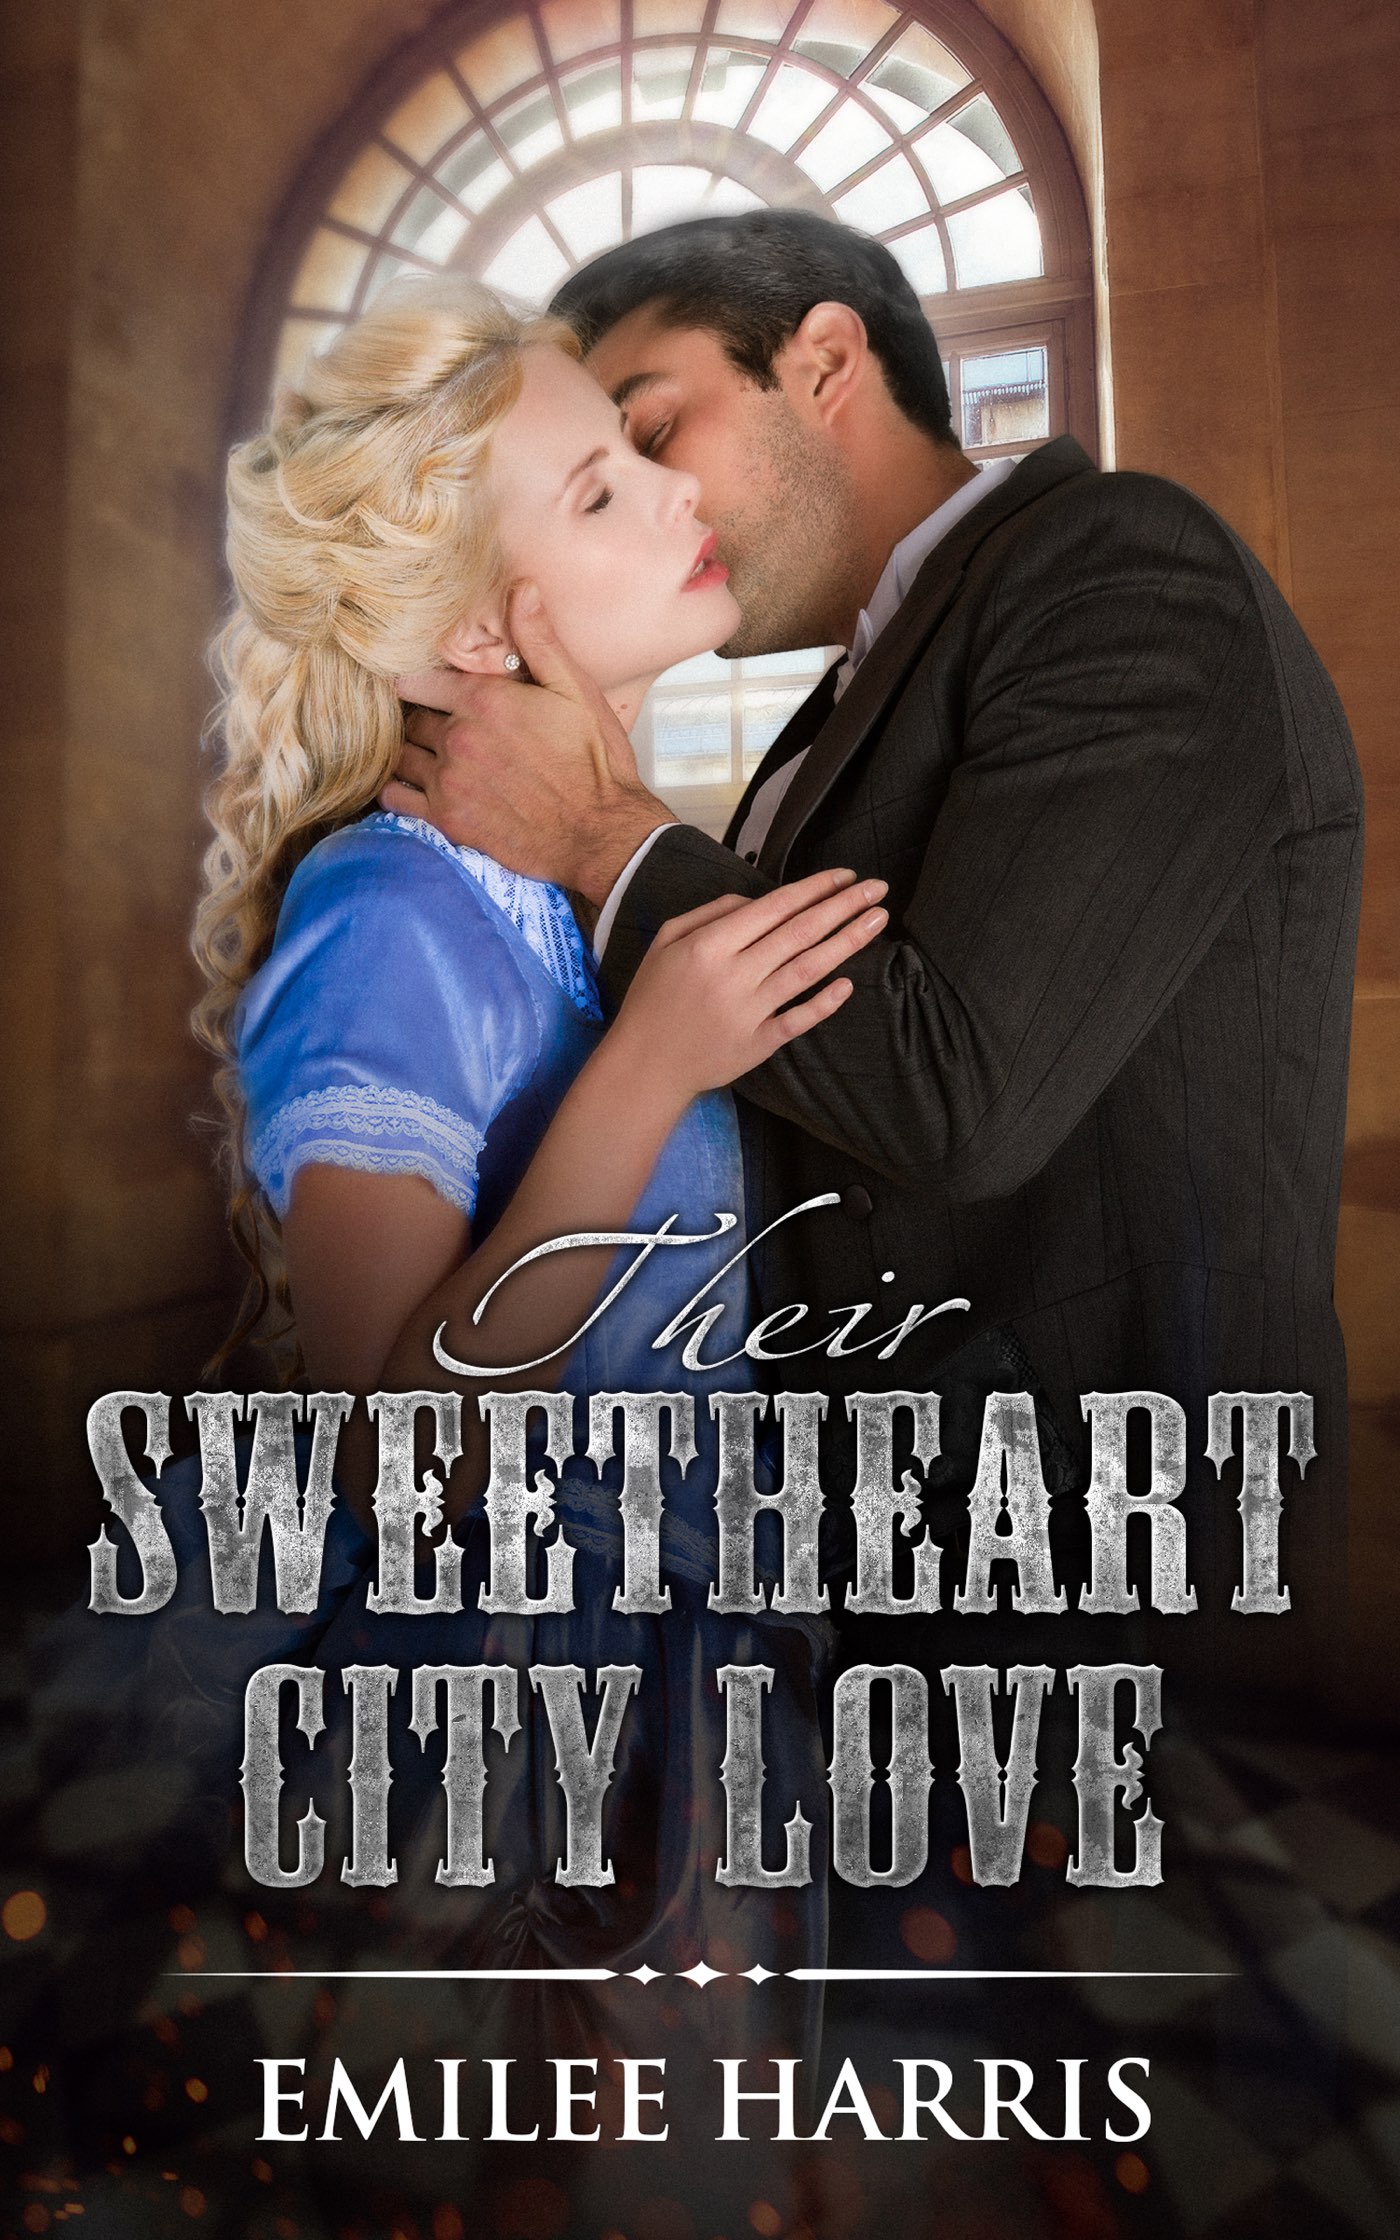 FREE: Their Sweetheart City Love by Emilee Harris